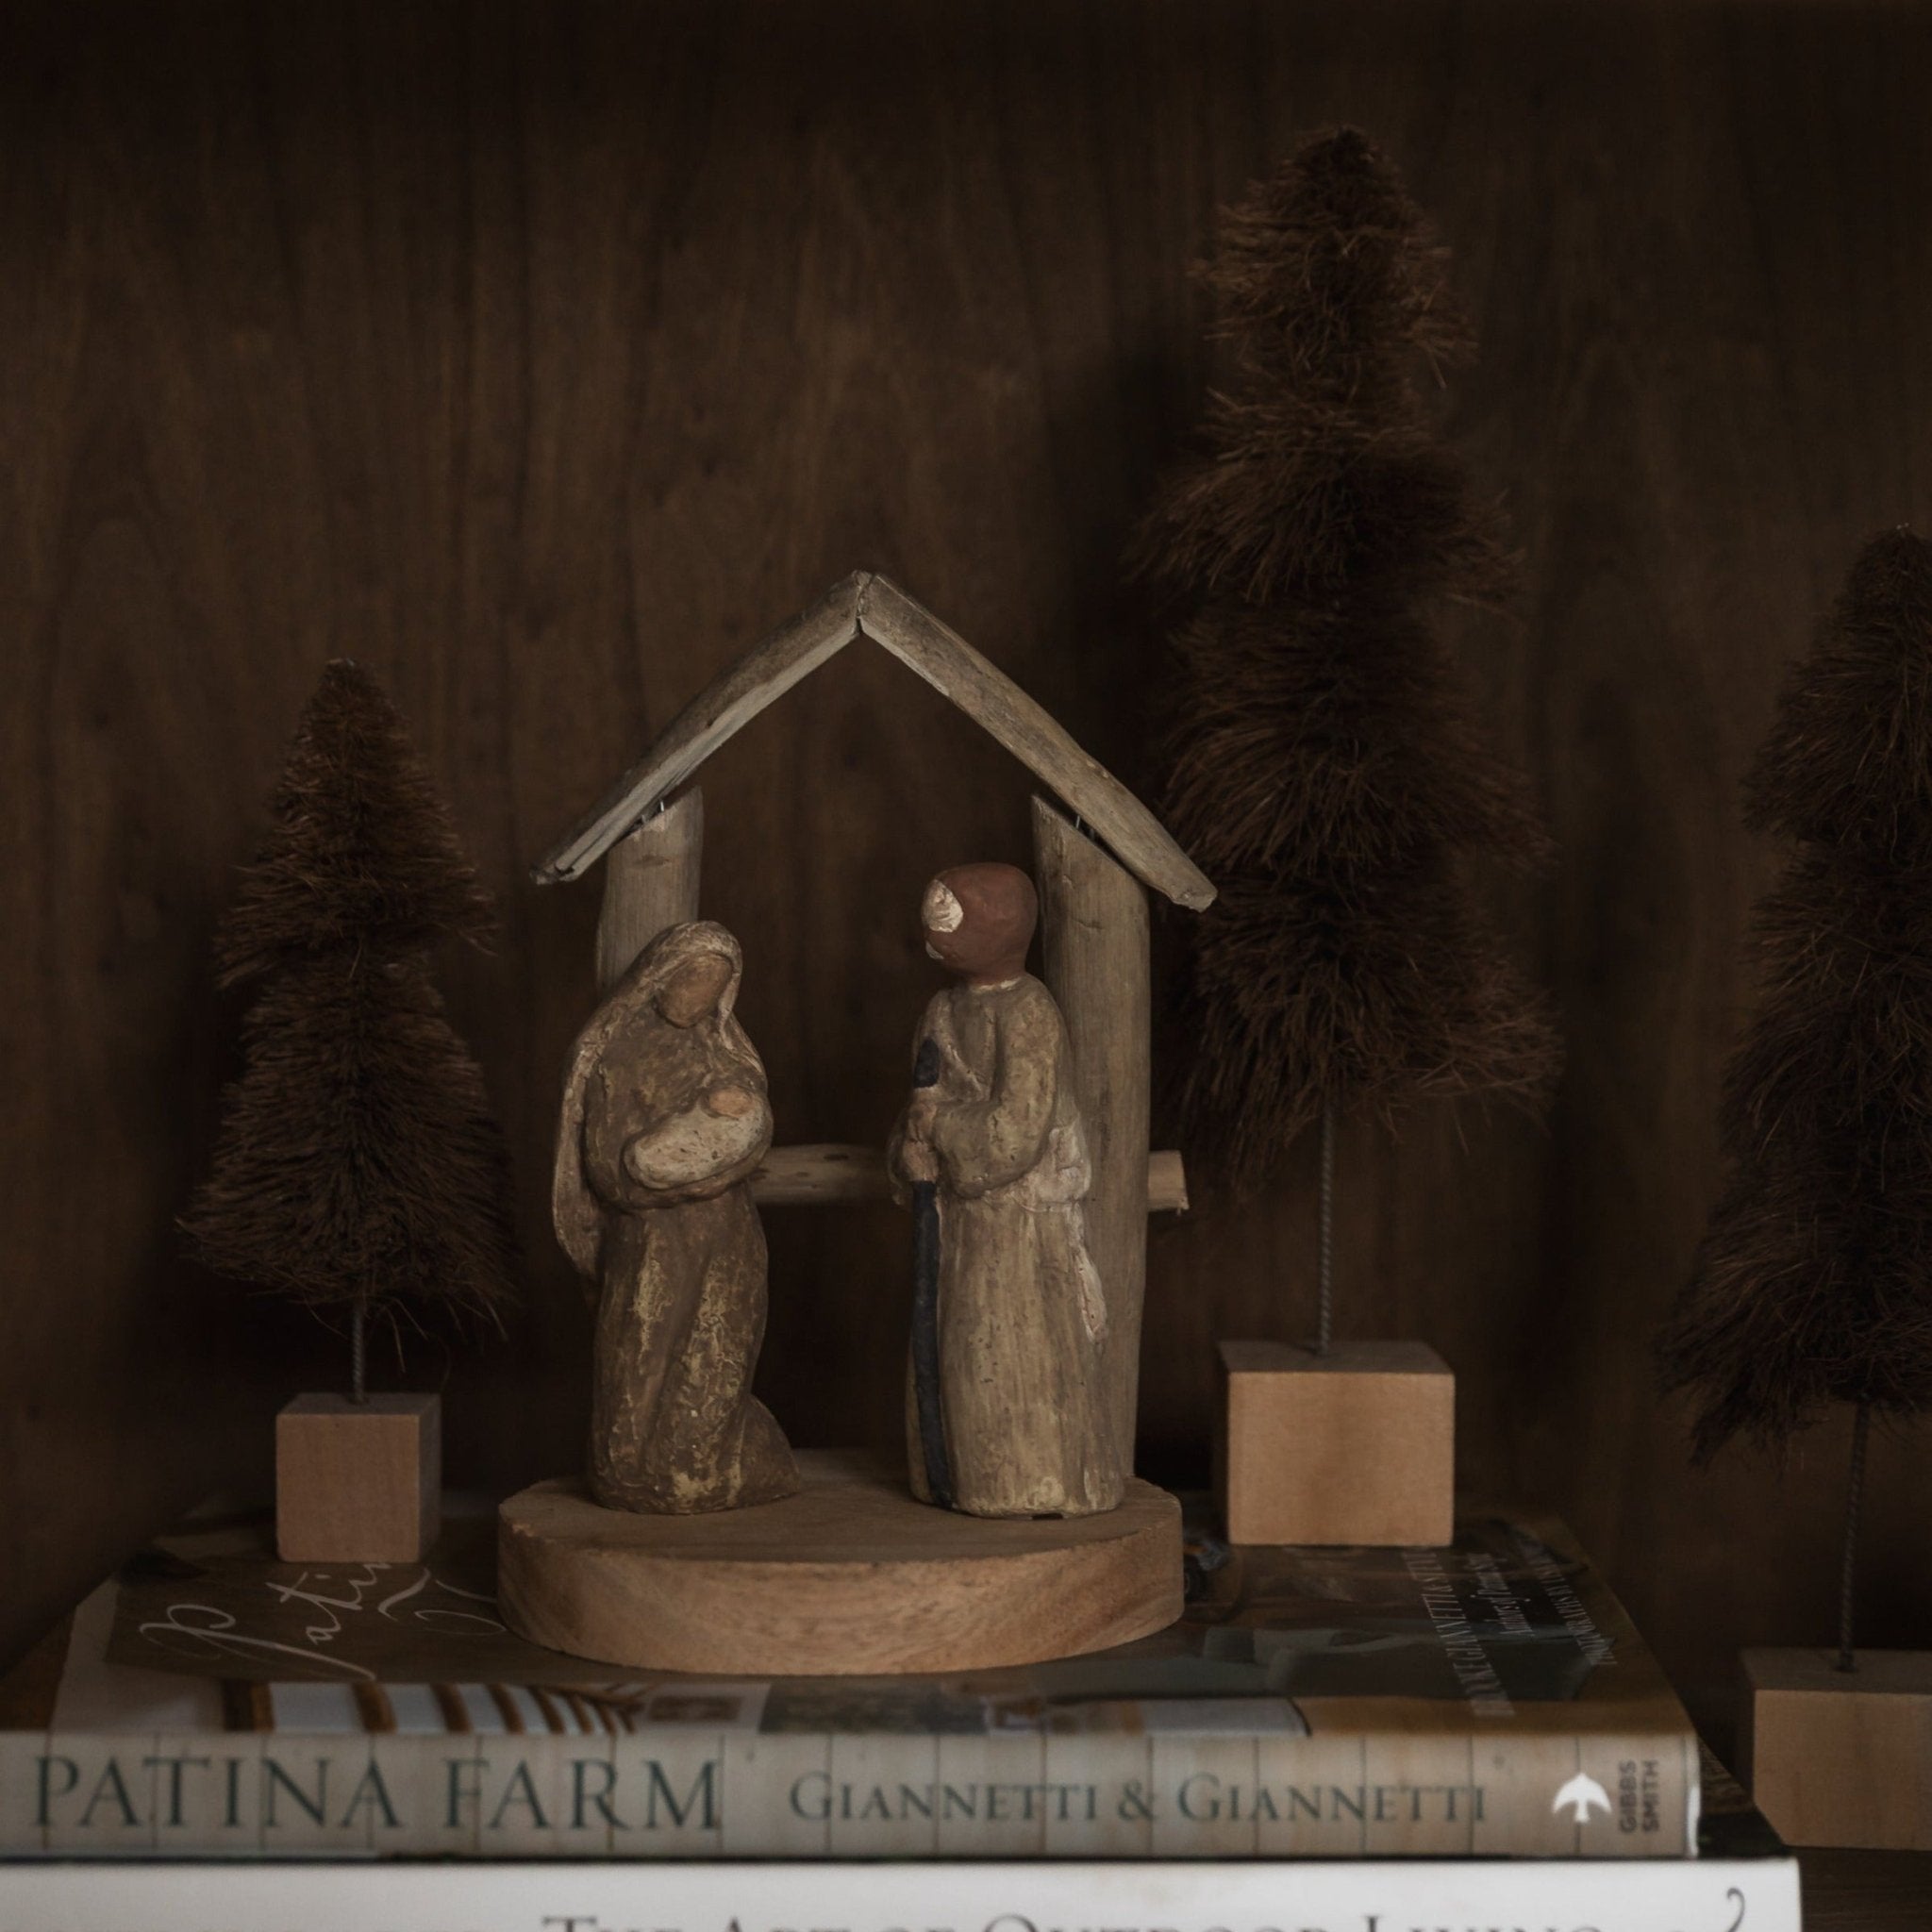 Driftwood & Paper Mache Nativity Scene - Annie & Flora